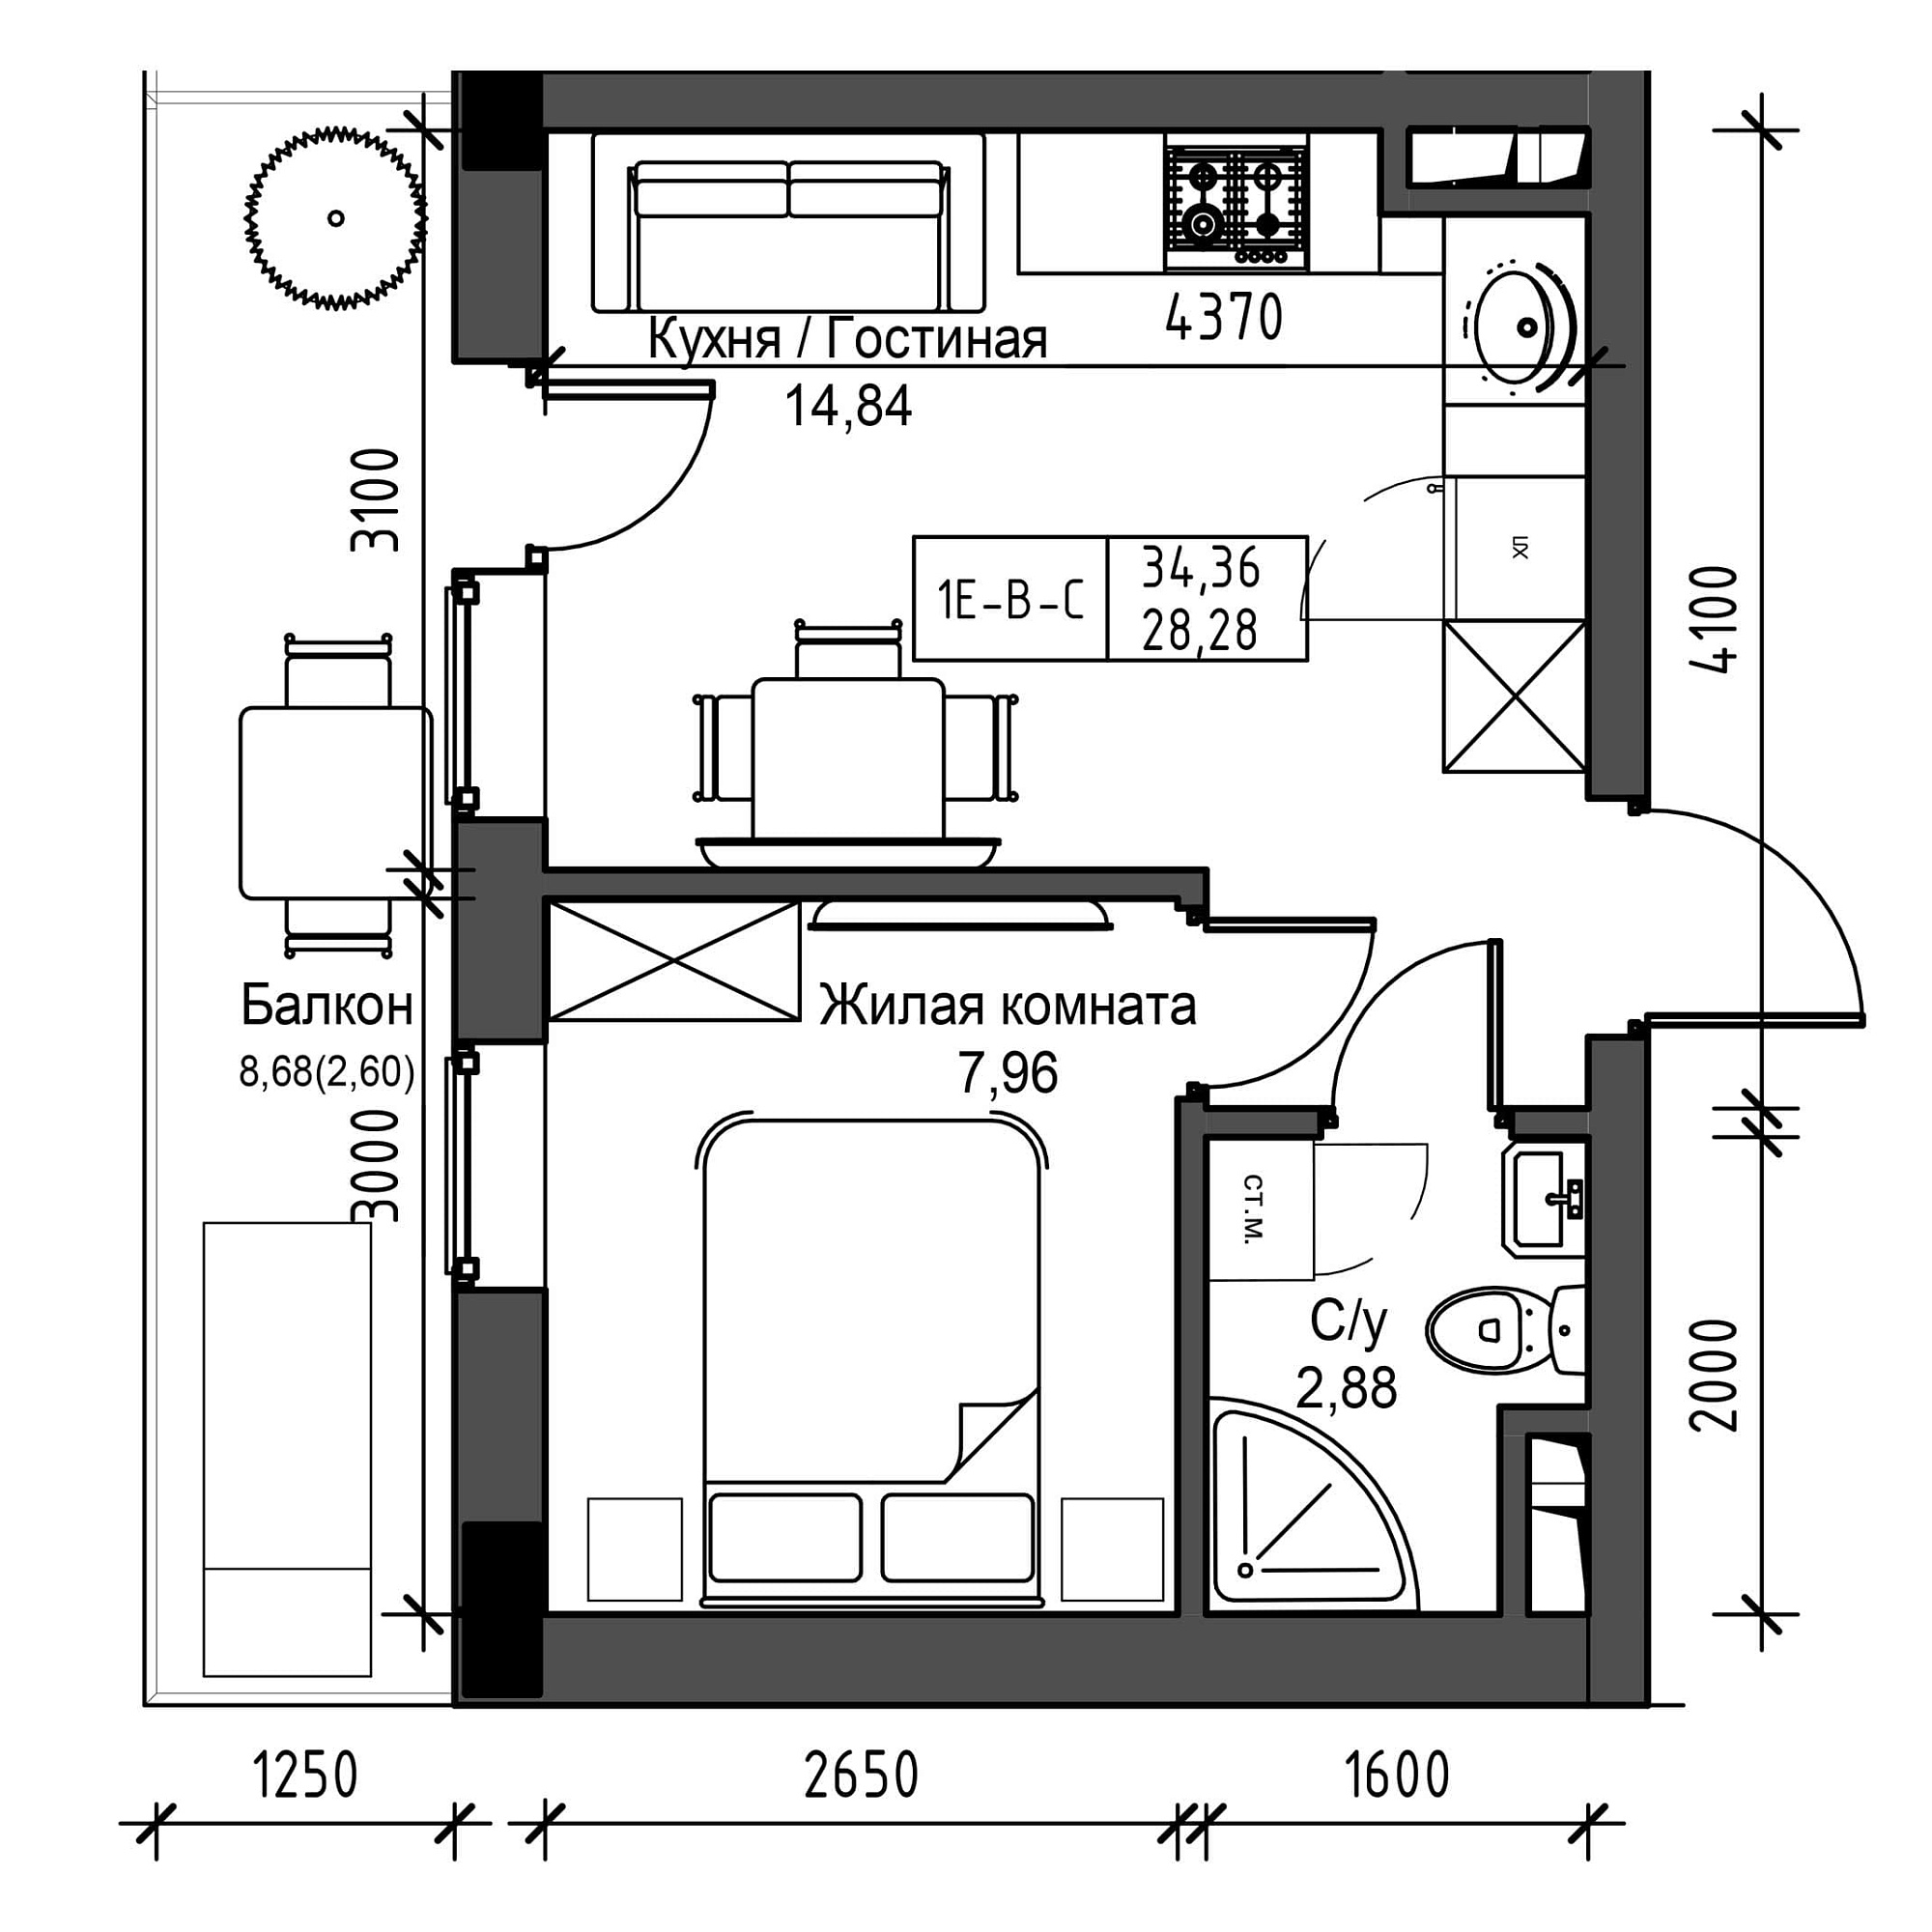 Планування 1-к квартира площею 28.28м2, UM-001-06/0014.